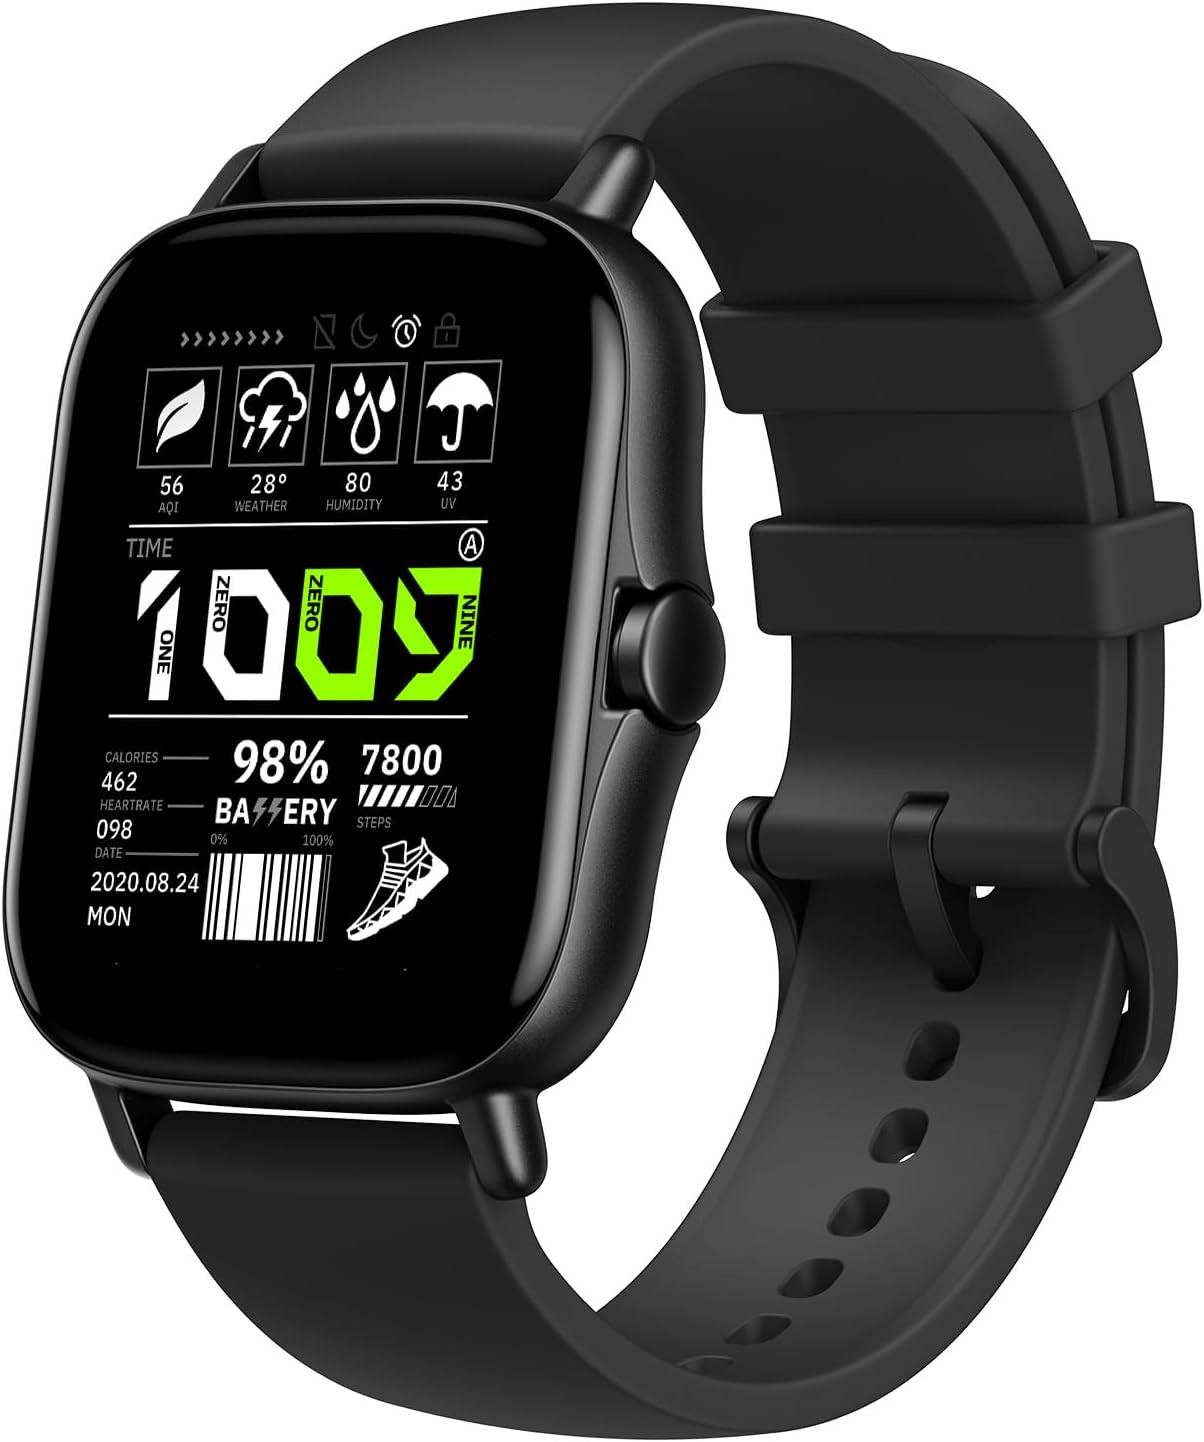 The Luxium Smart Watch Amazon: